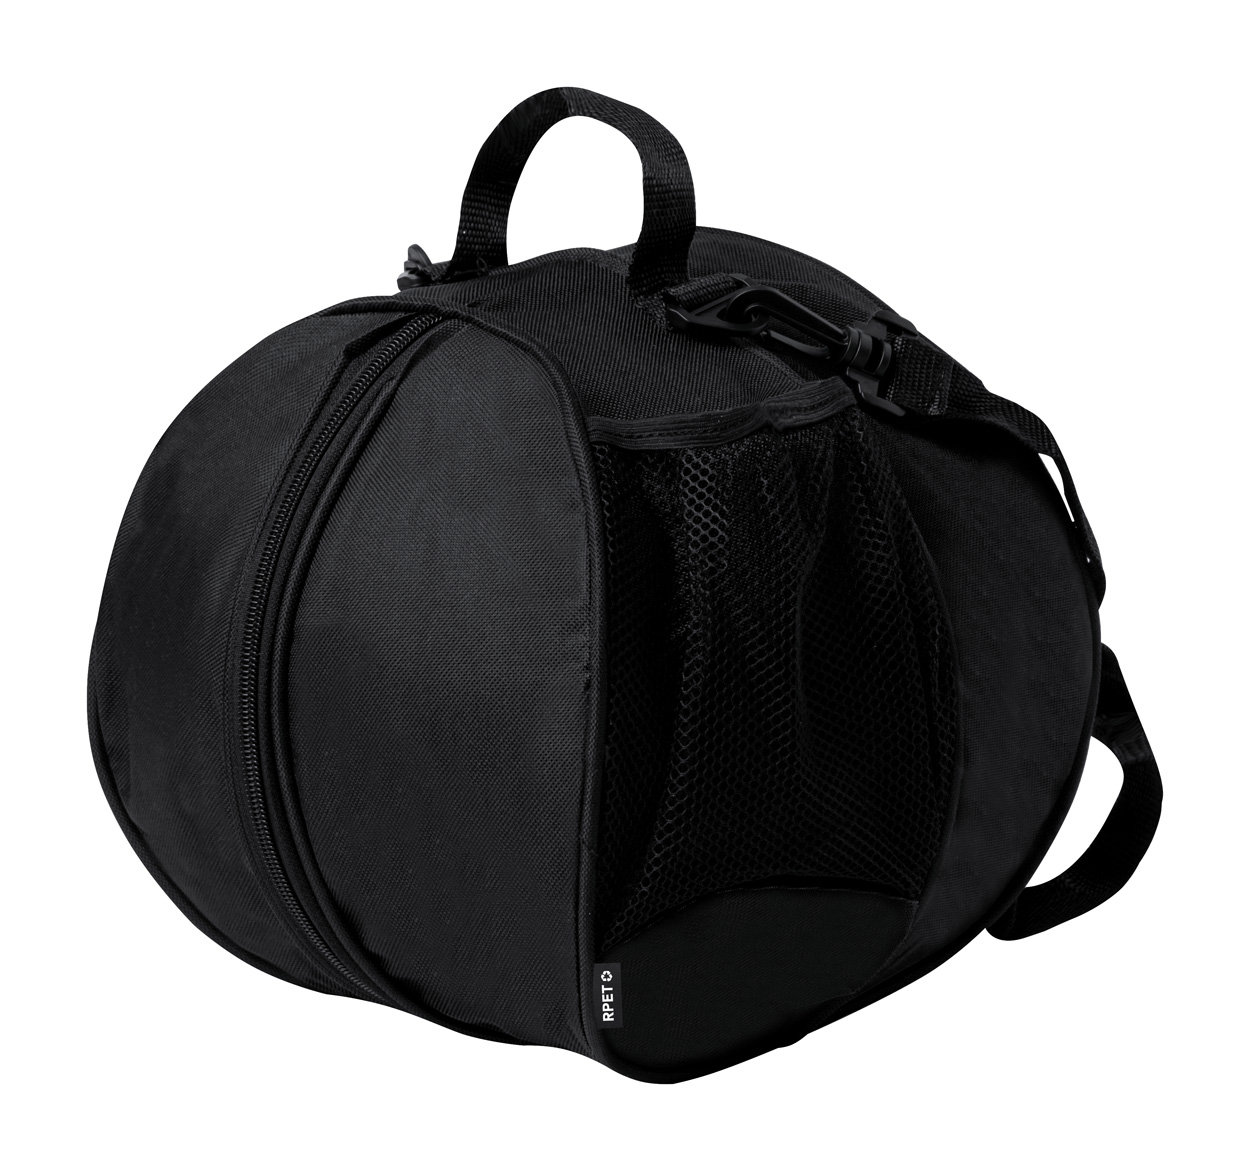 Lafin ball bag - black